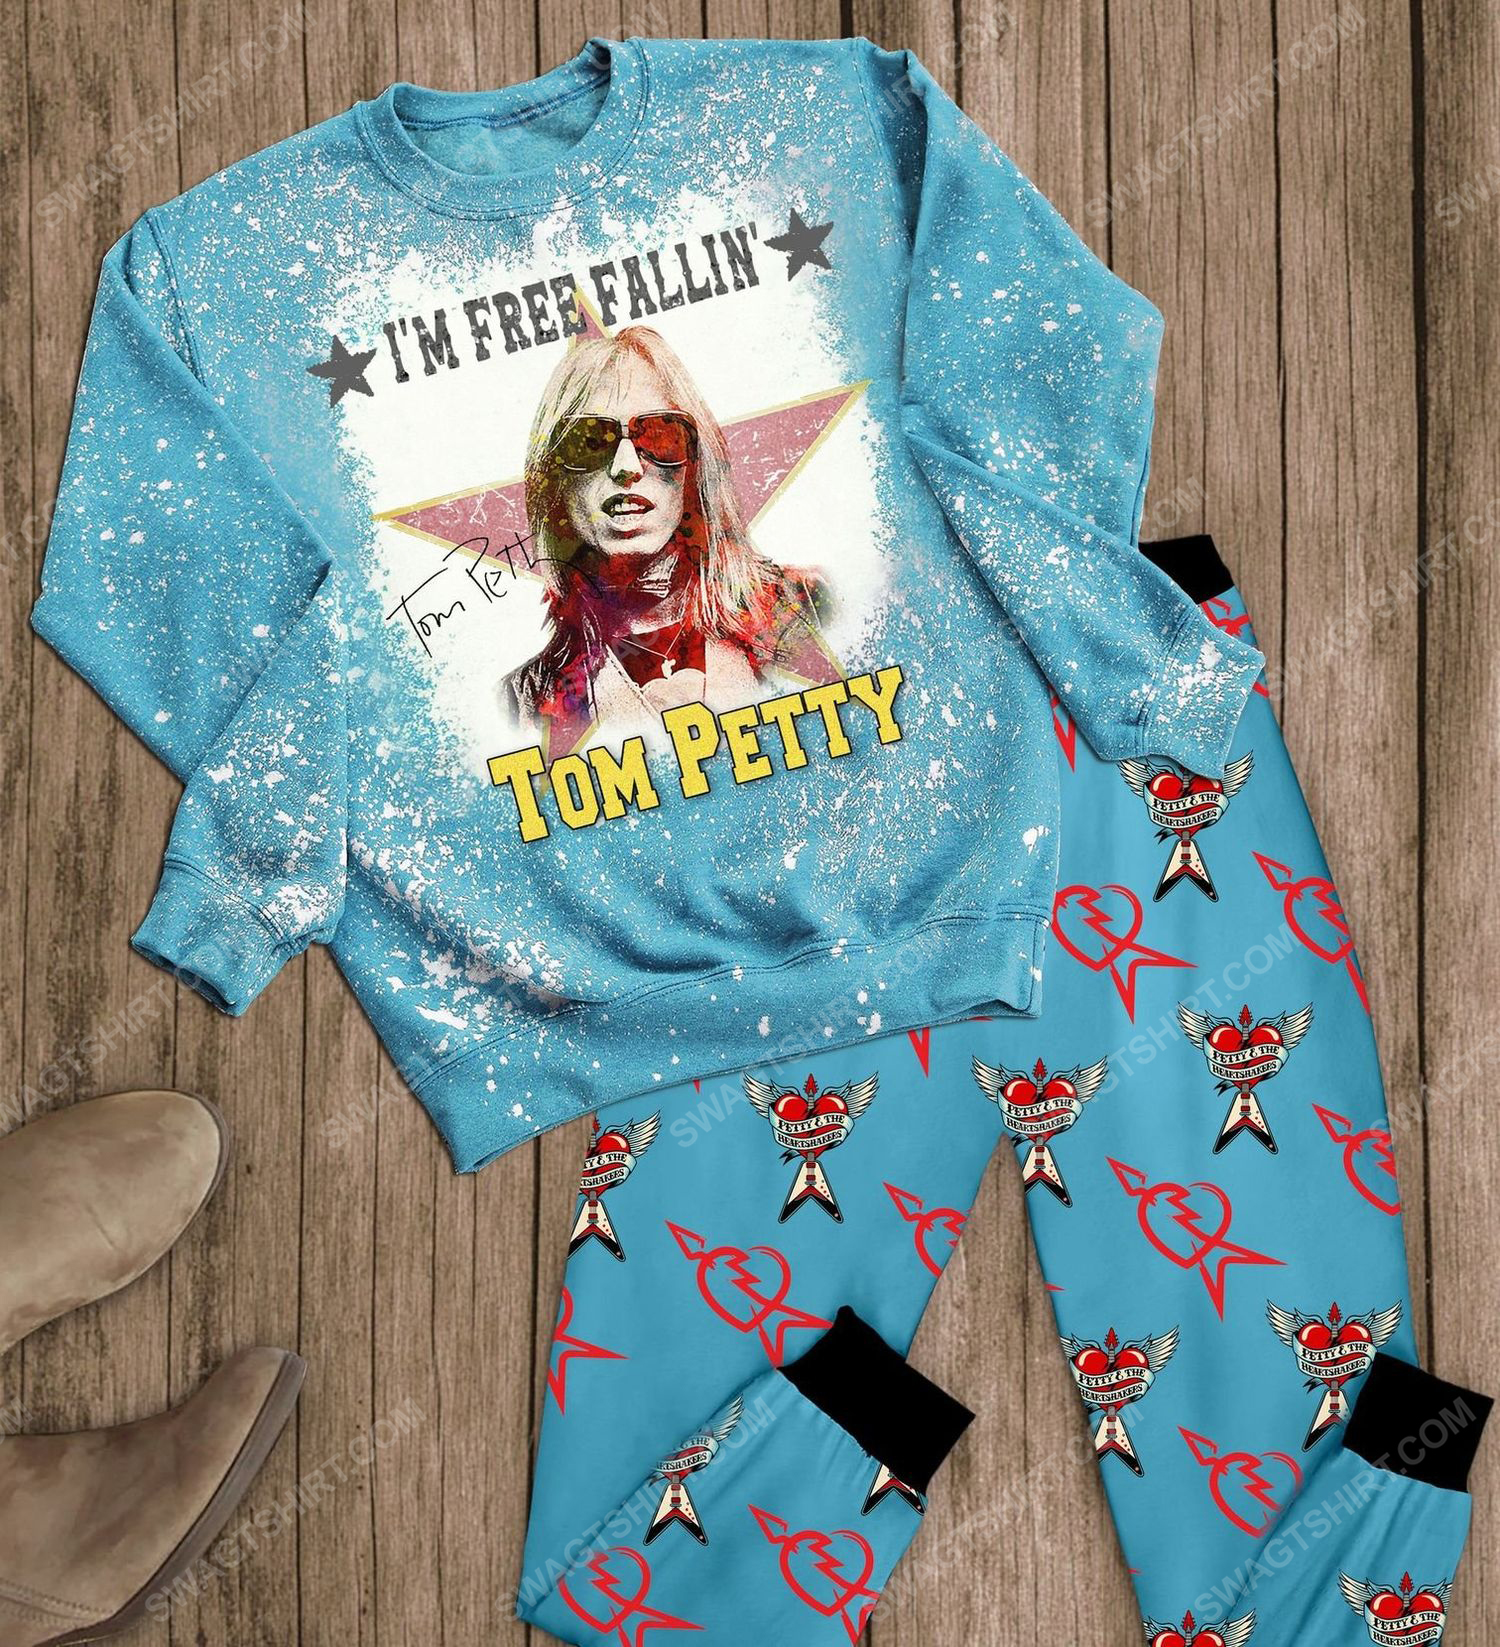 Ed sheeran you know i want your love full print pajamas set 1 - Copy